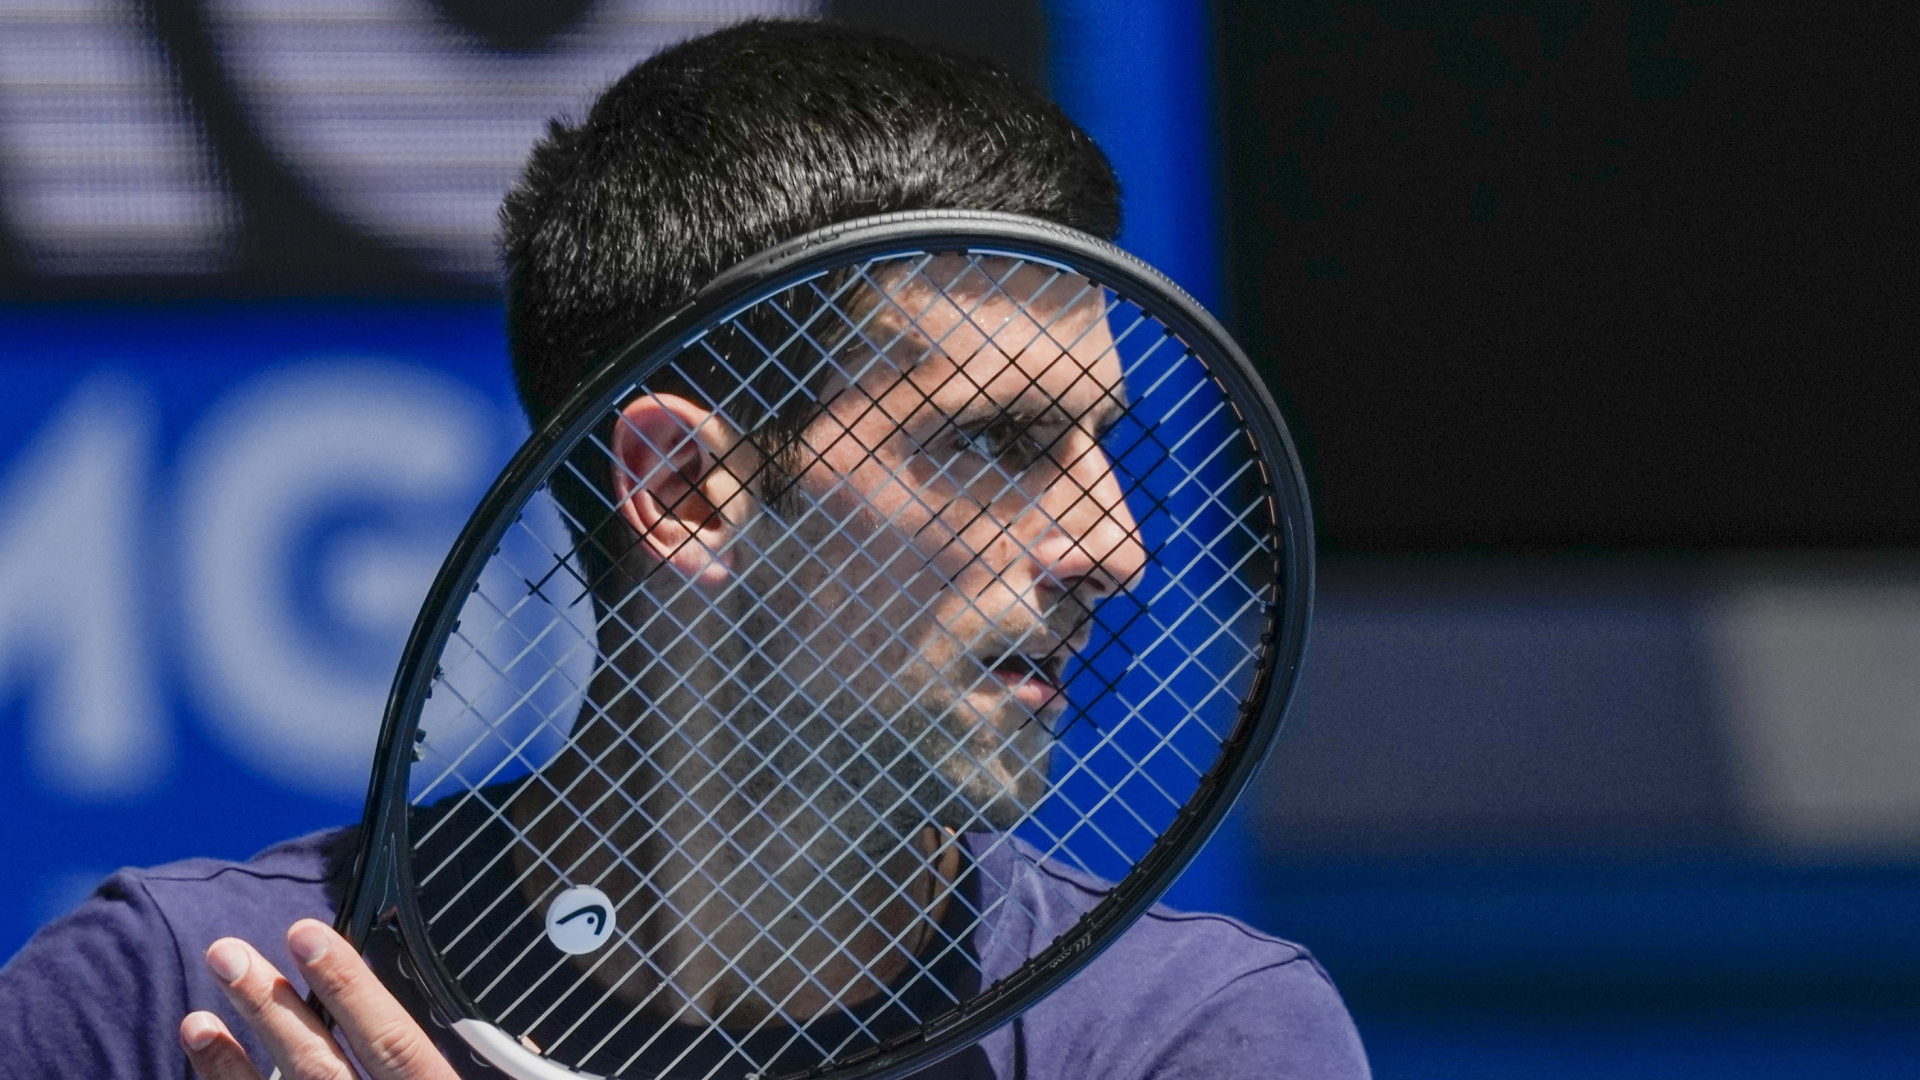 Tennisspieler Novak Djokovic hält einen Tennisschläger in der Hand. | AP